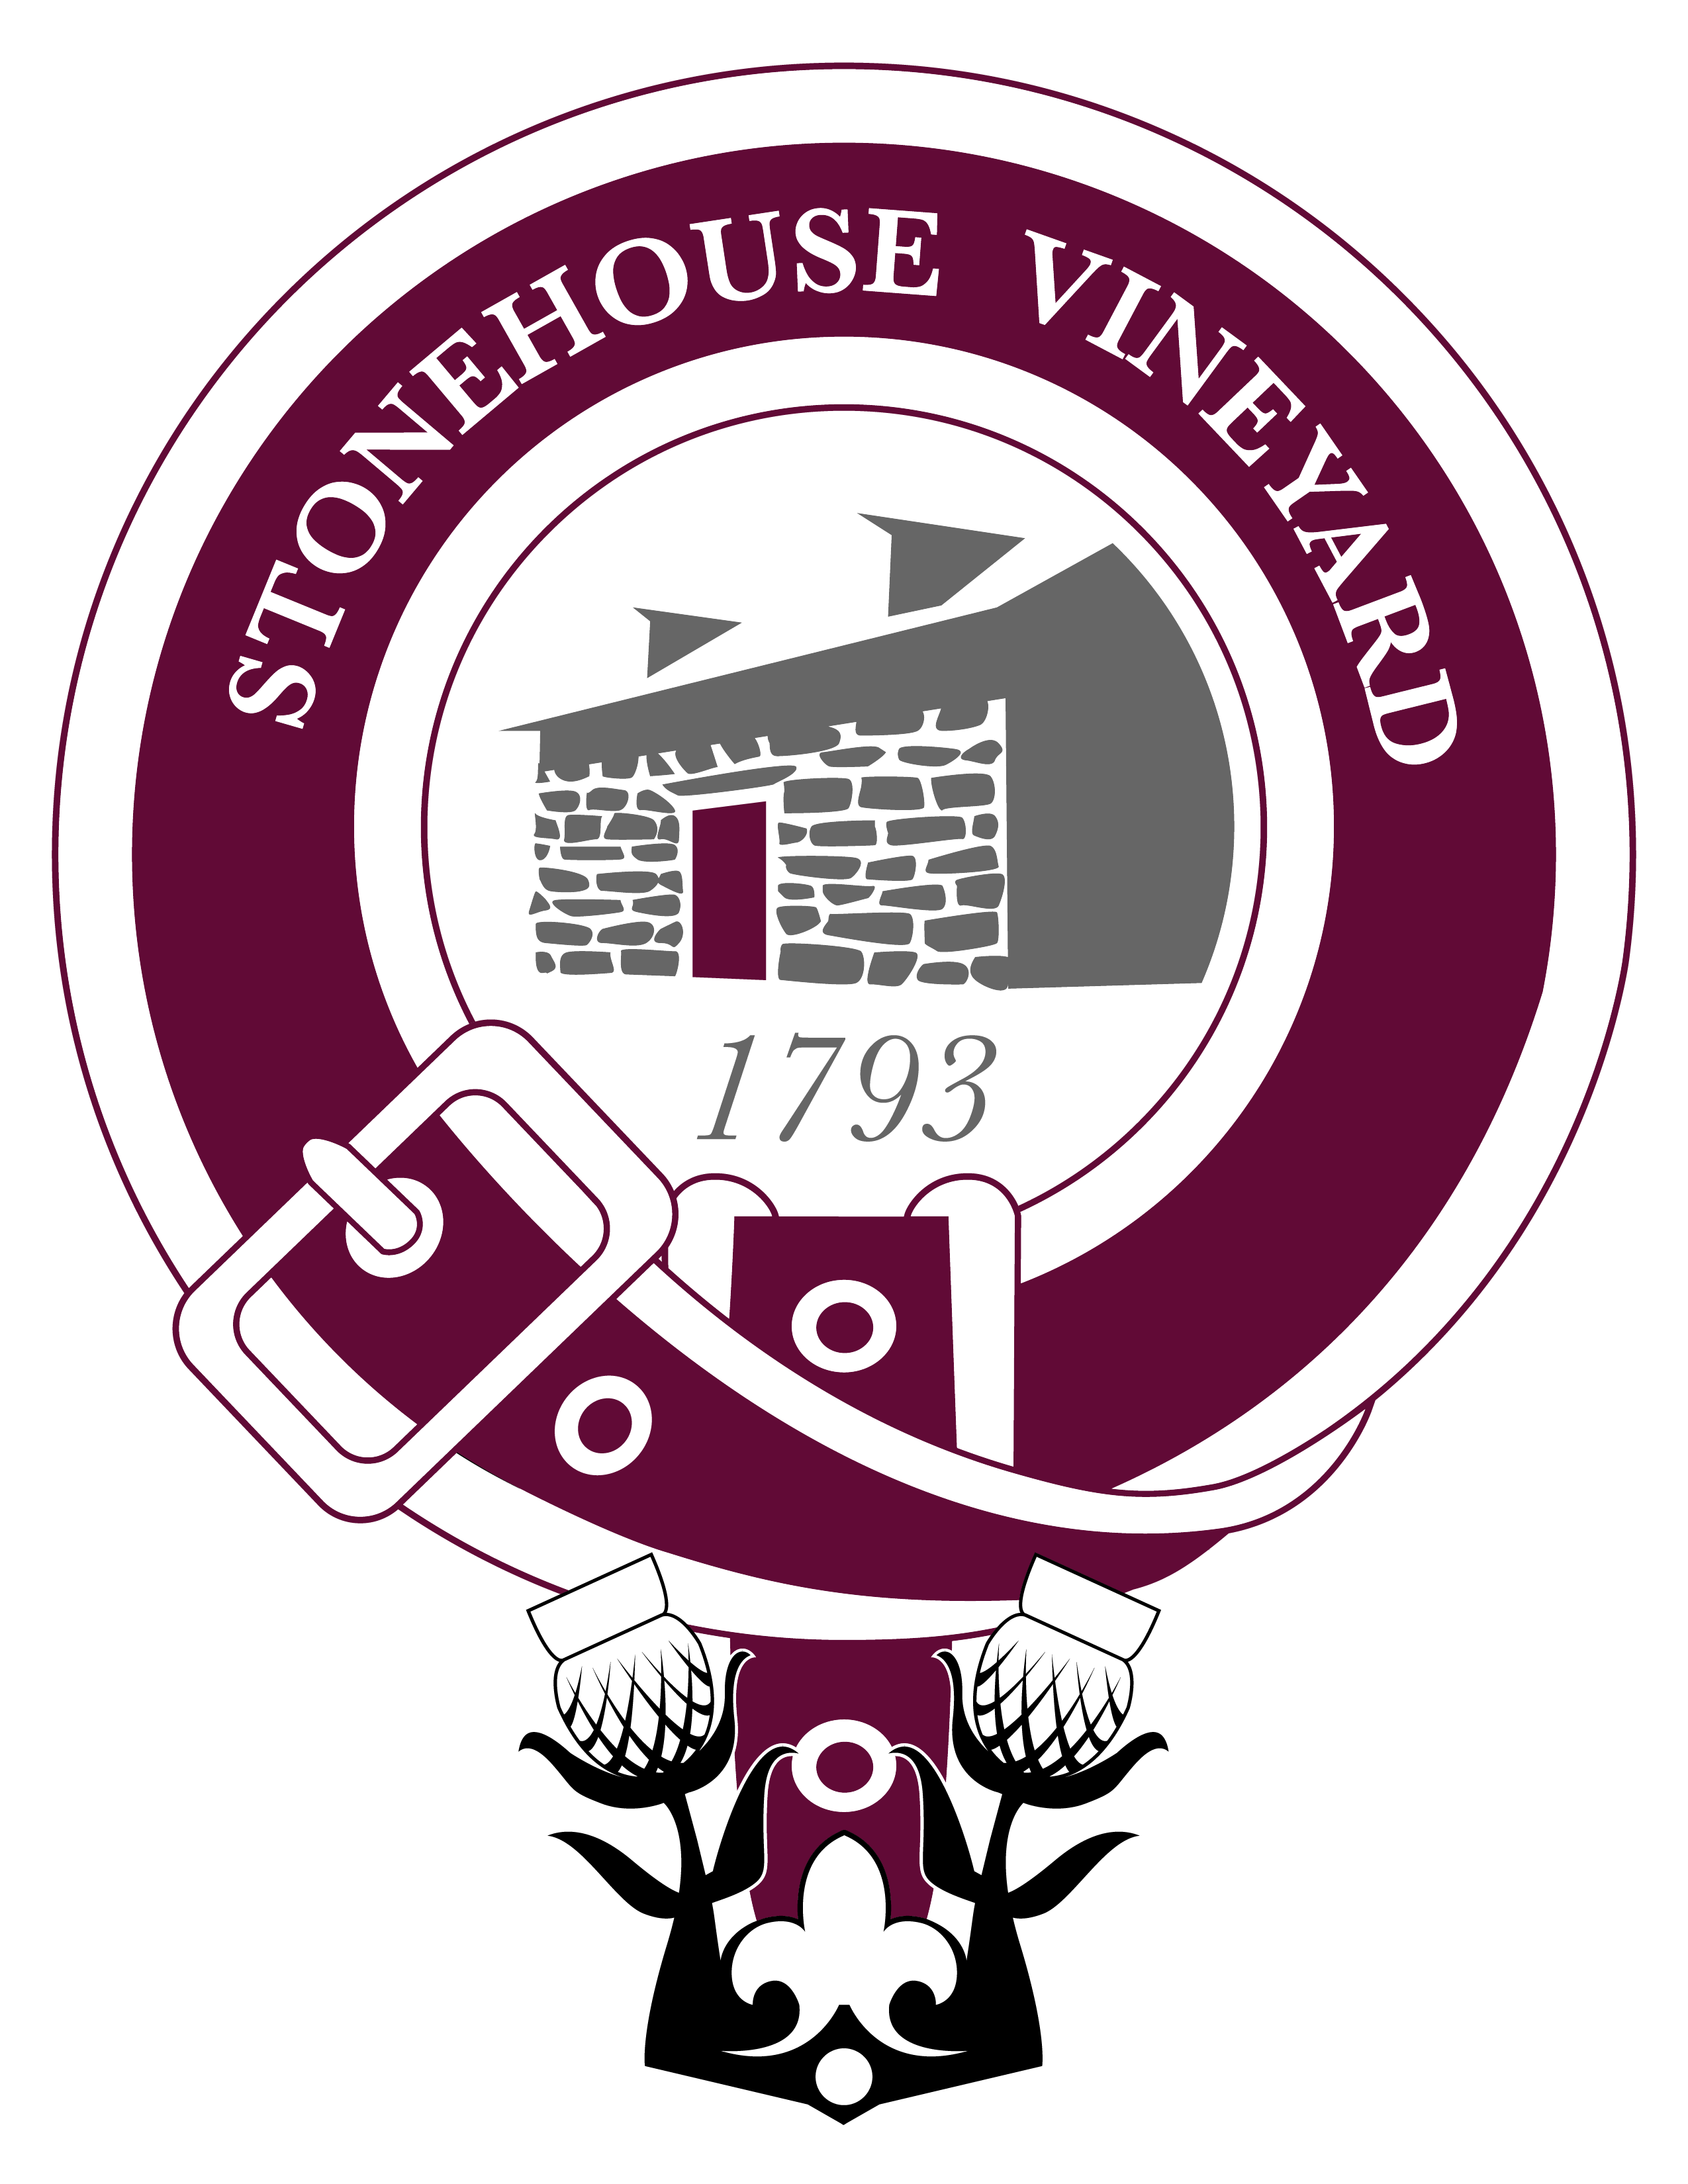 Stonehouse Vineyard Gift Certificate $75